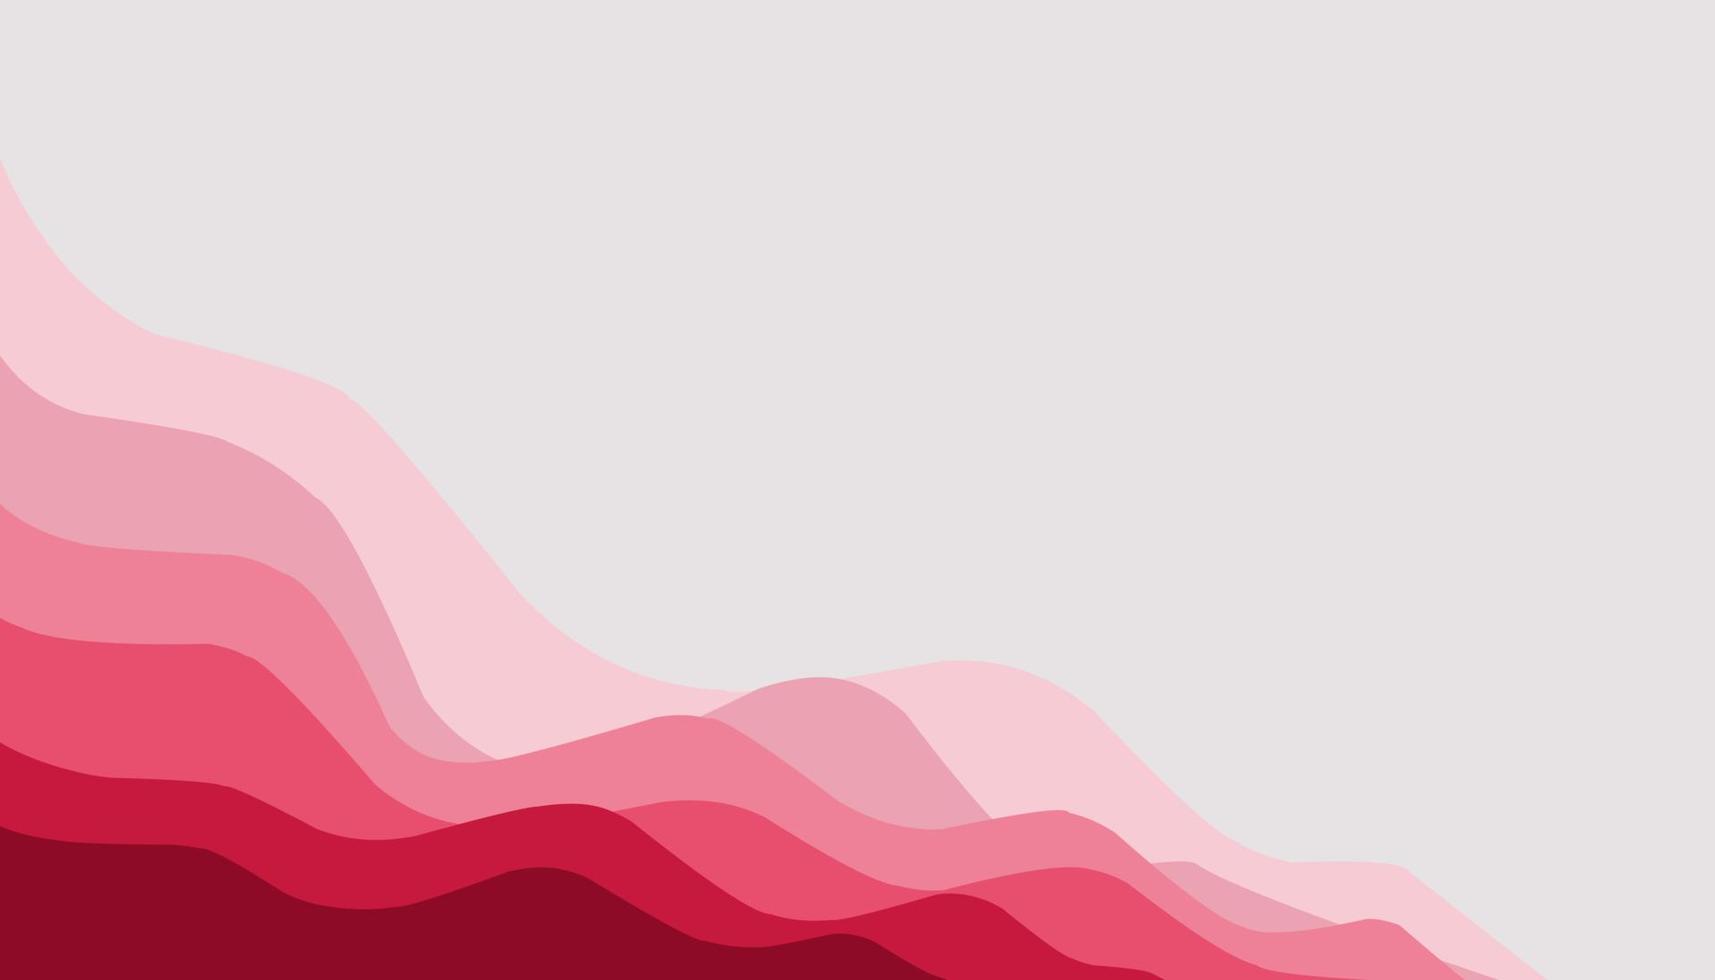 abstract achtergrond illustratie van rood golven vector